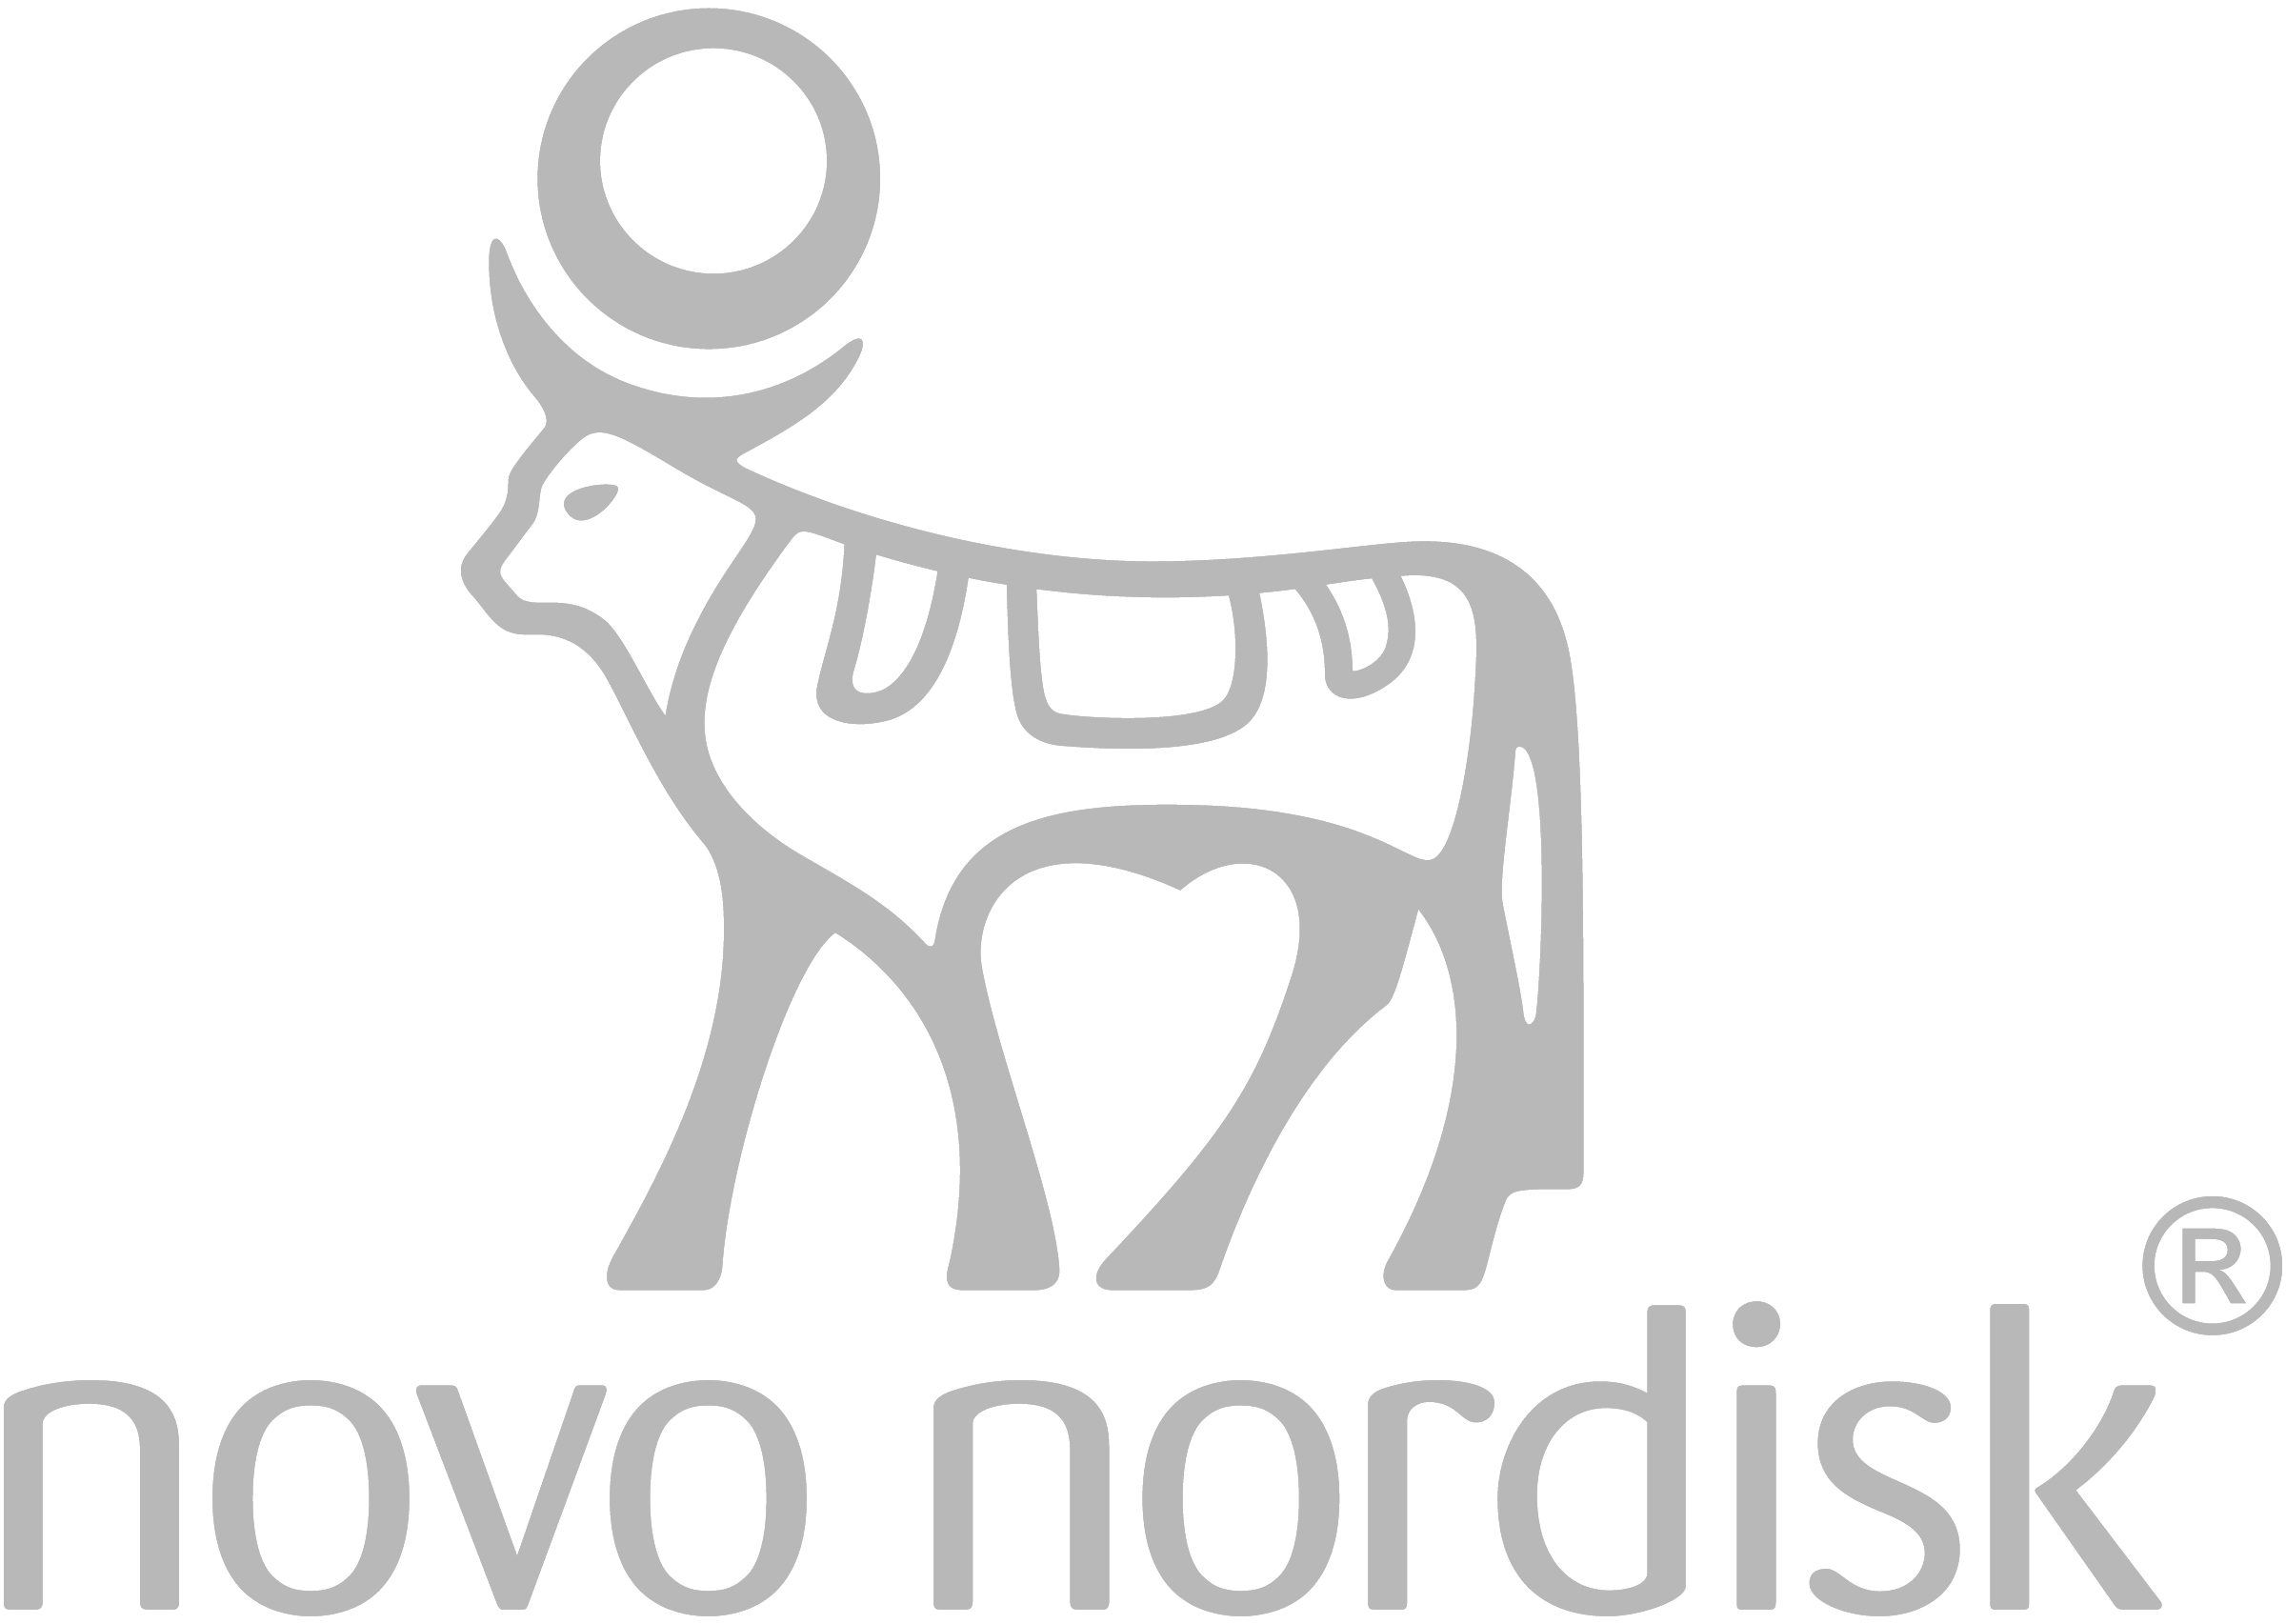 Novo nordisk_logo_gris